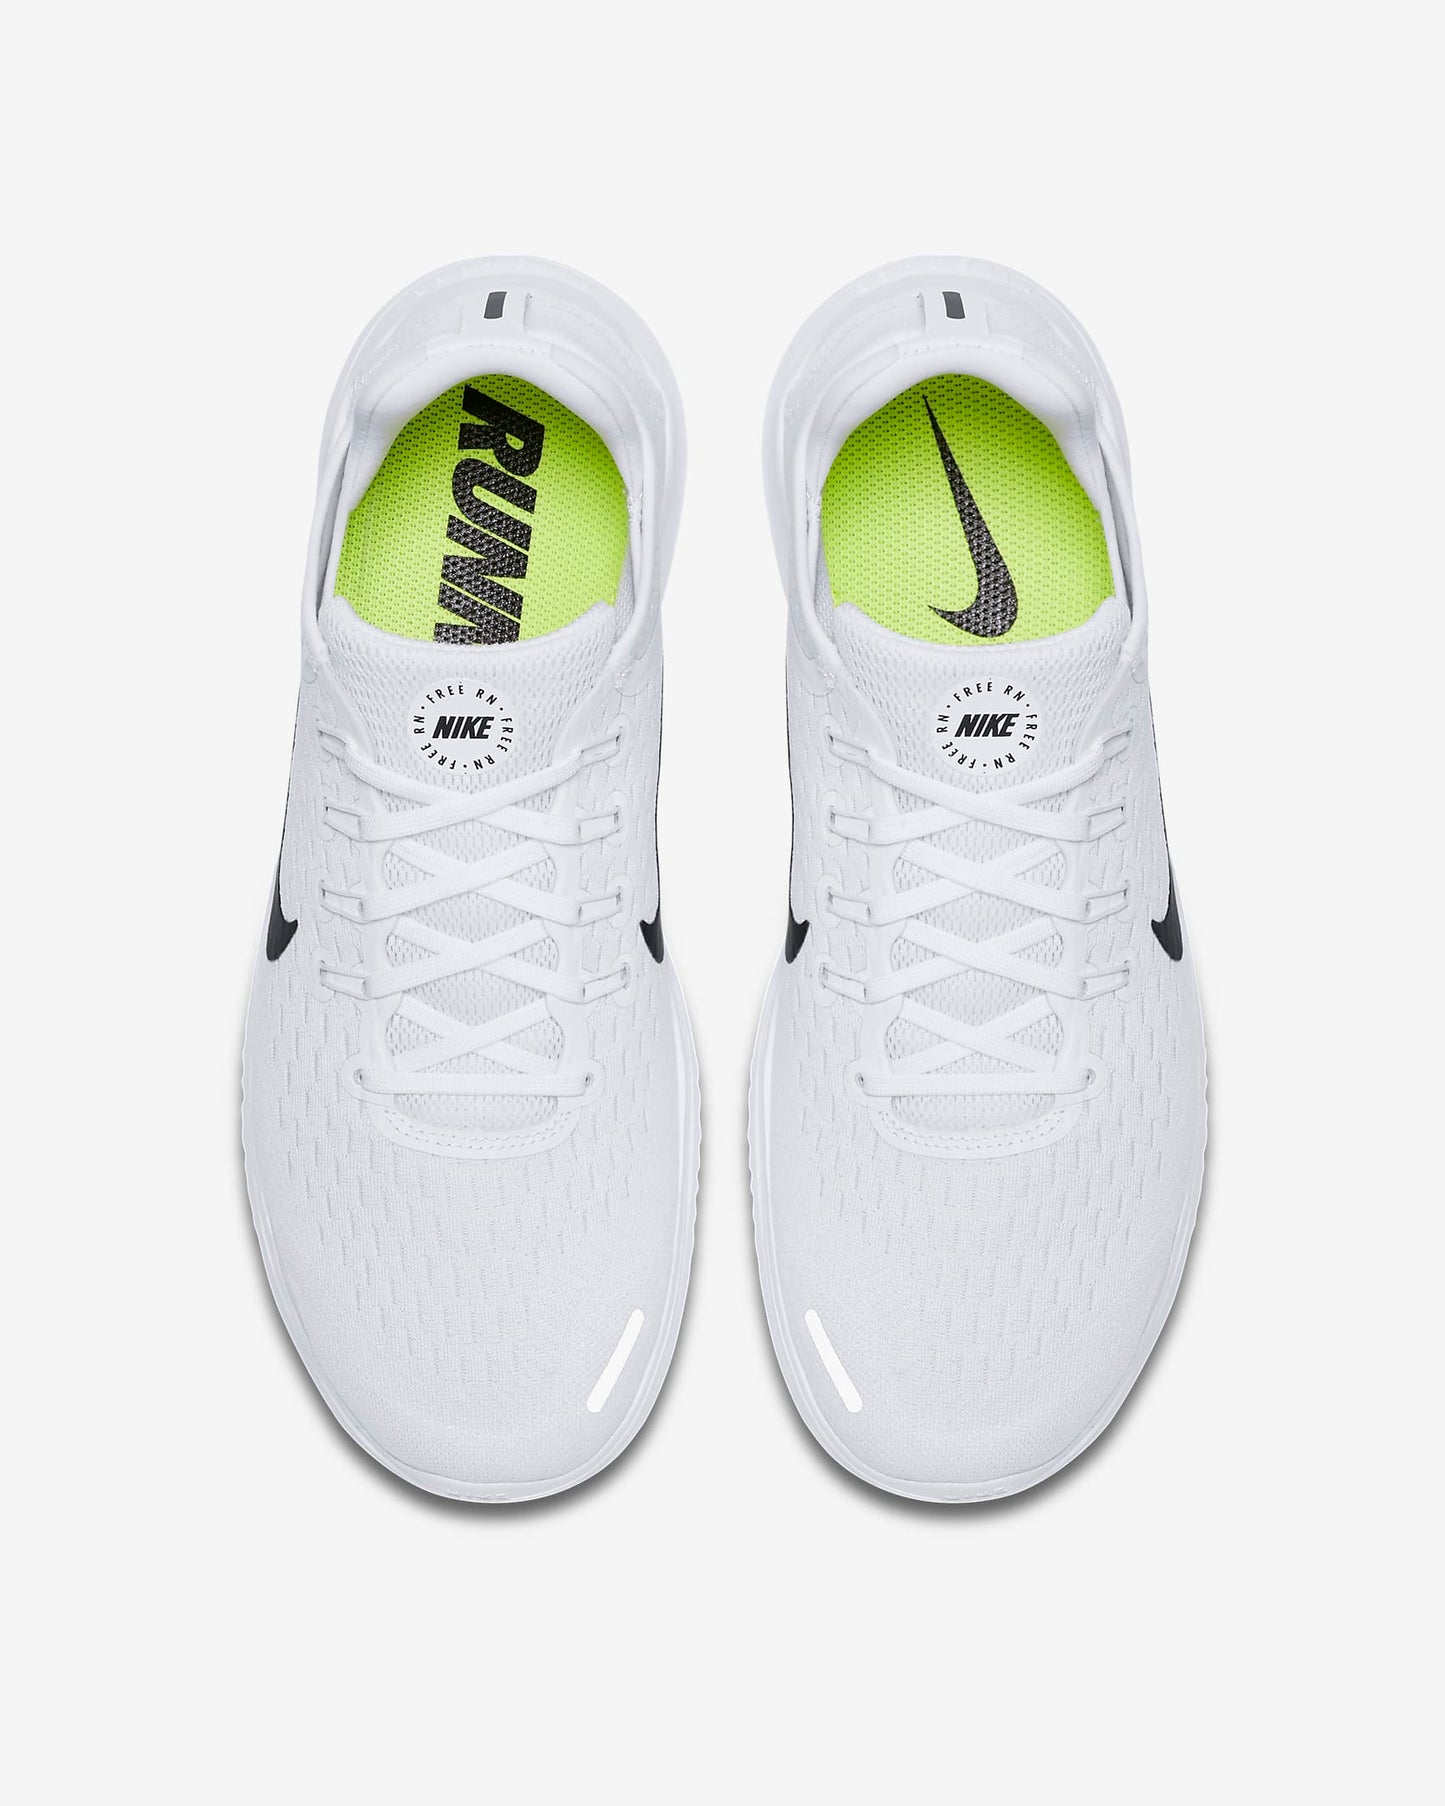 Nike Men's Free Run 2018, White/Black